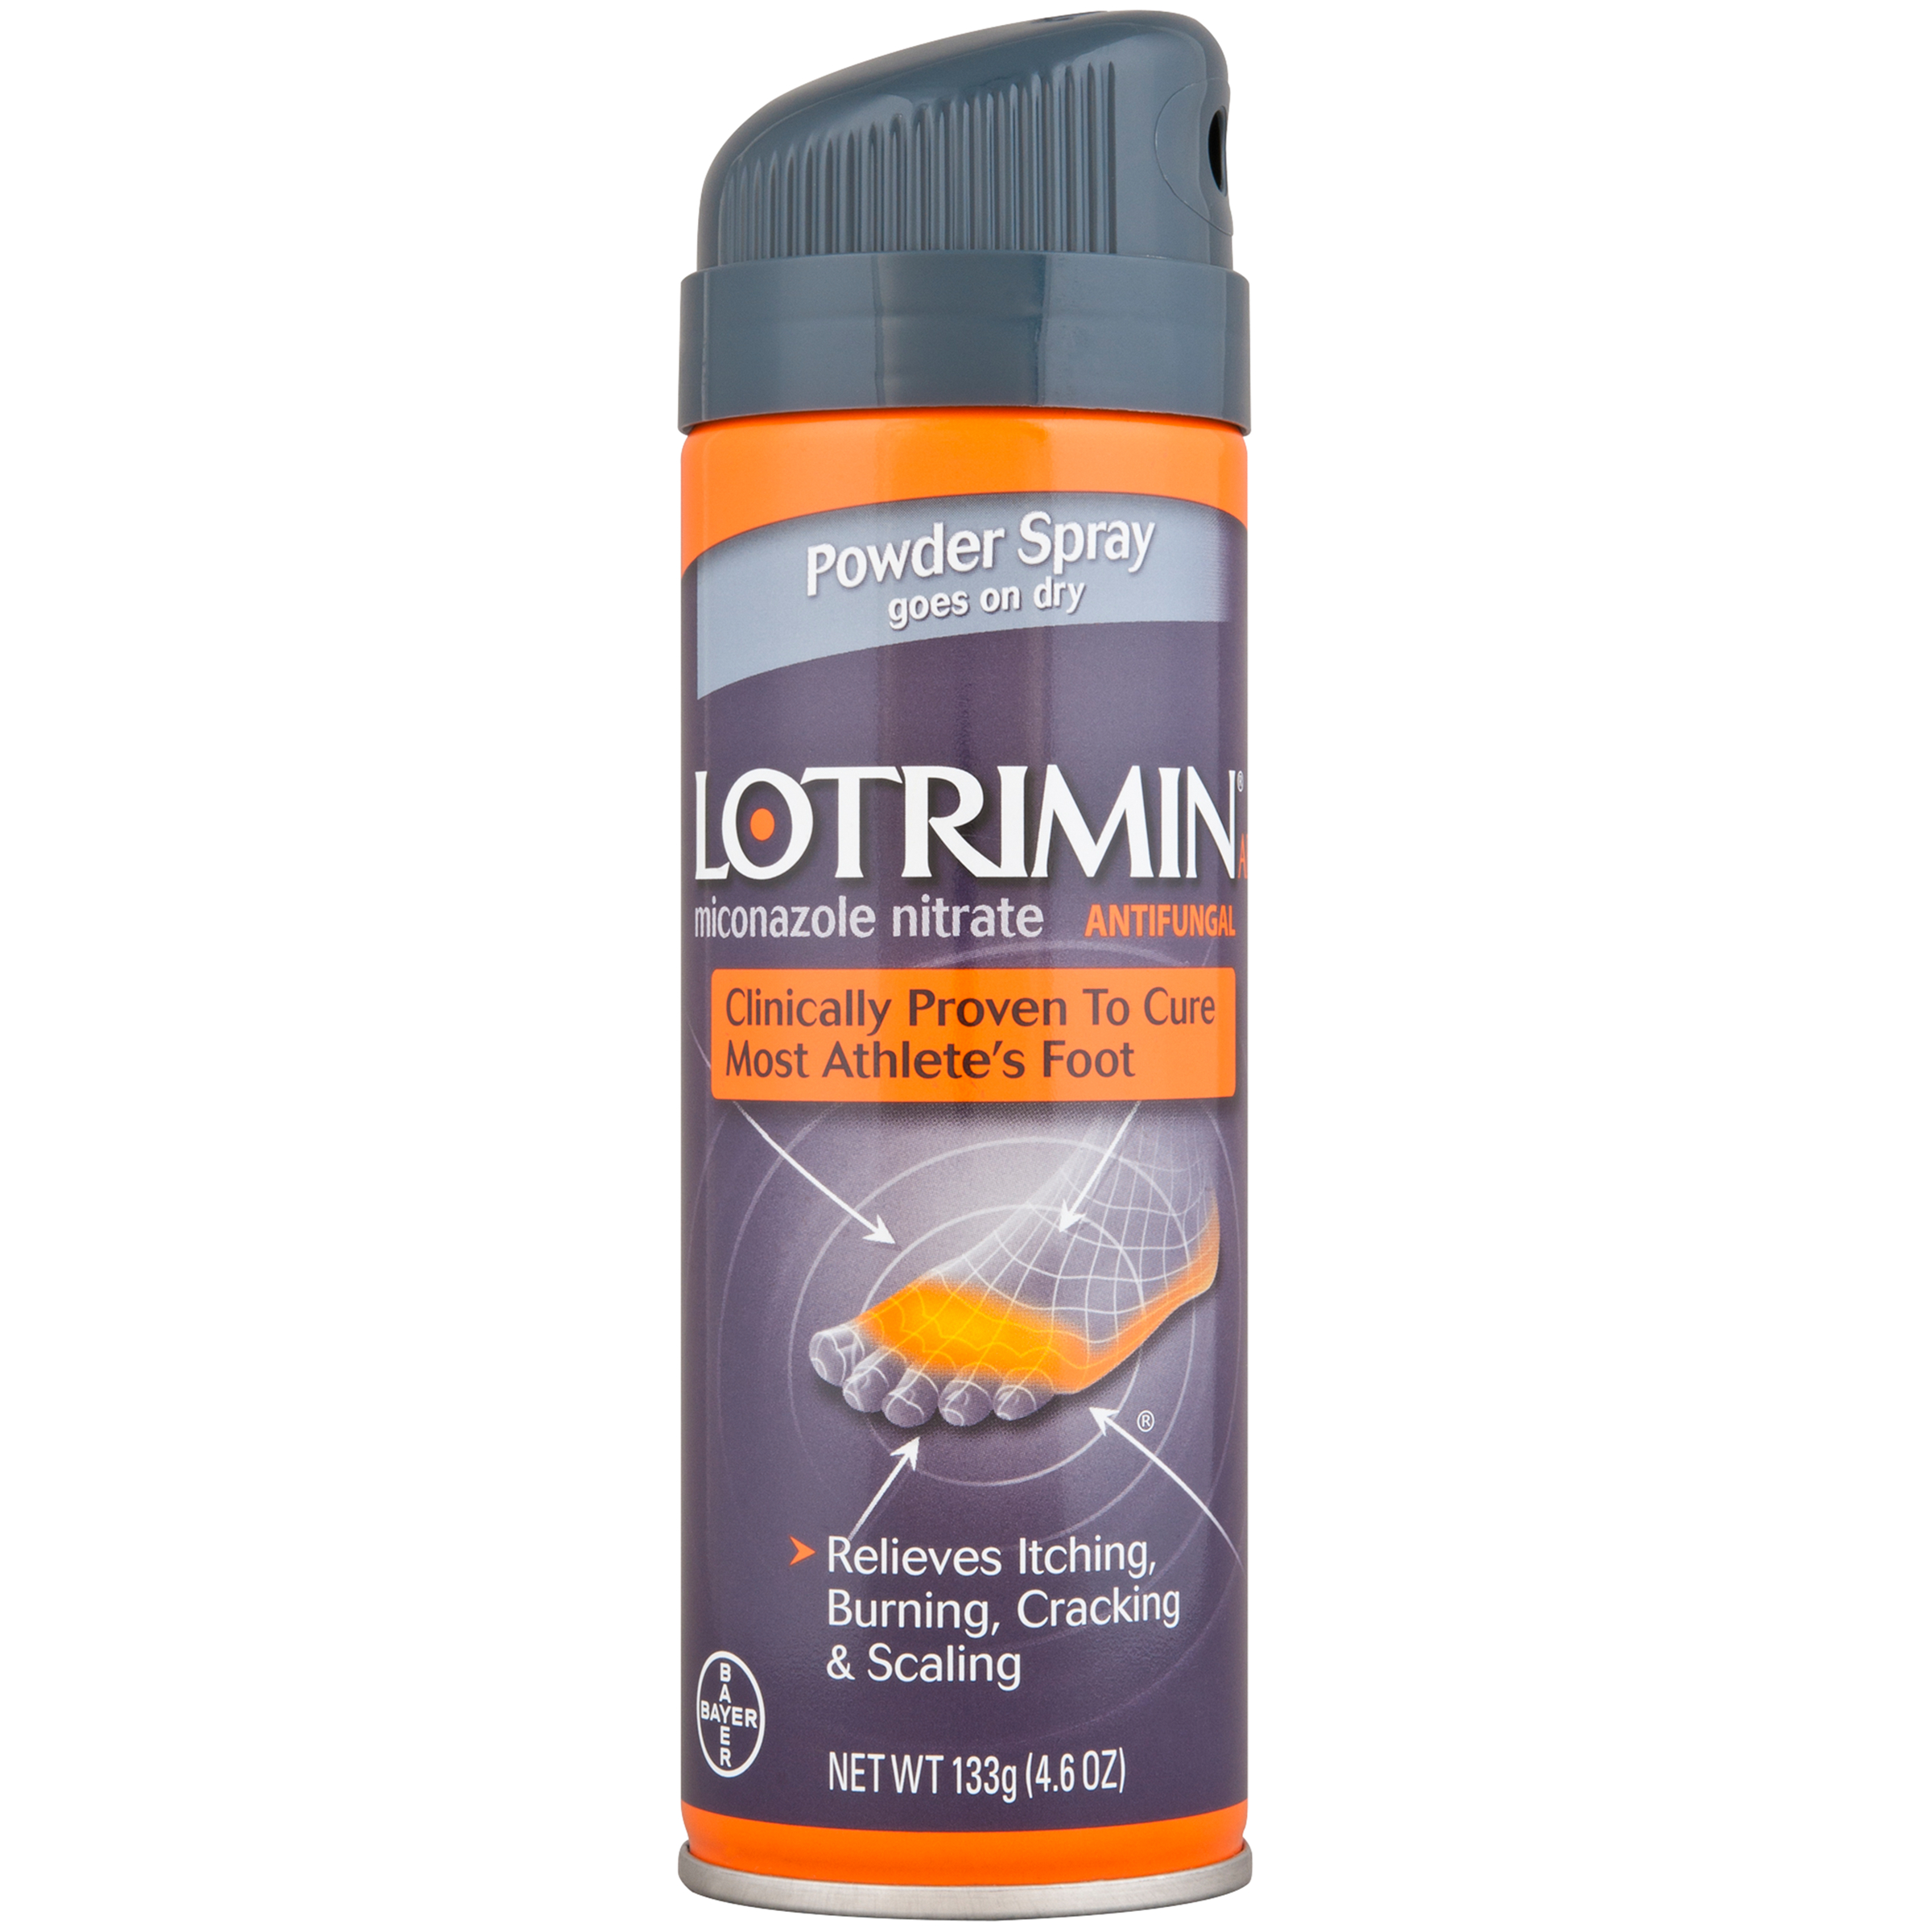 Lotrimin AF Antifungal, Powder Spray, 4.6 oz (133 g